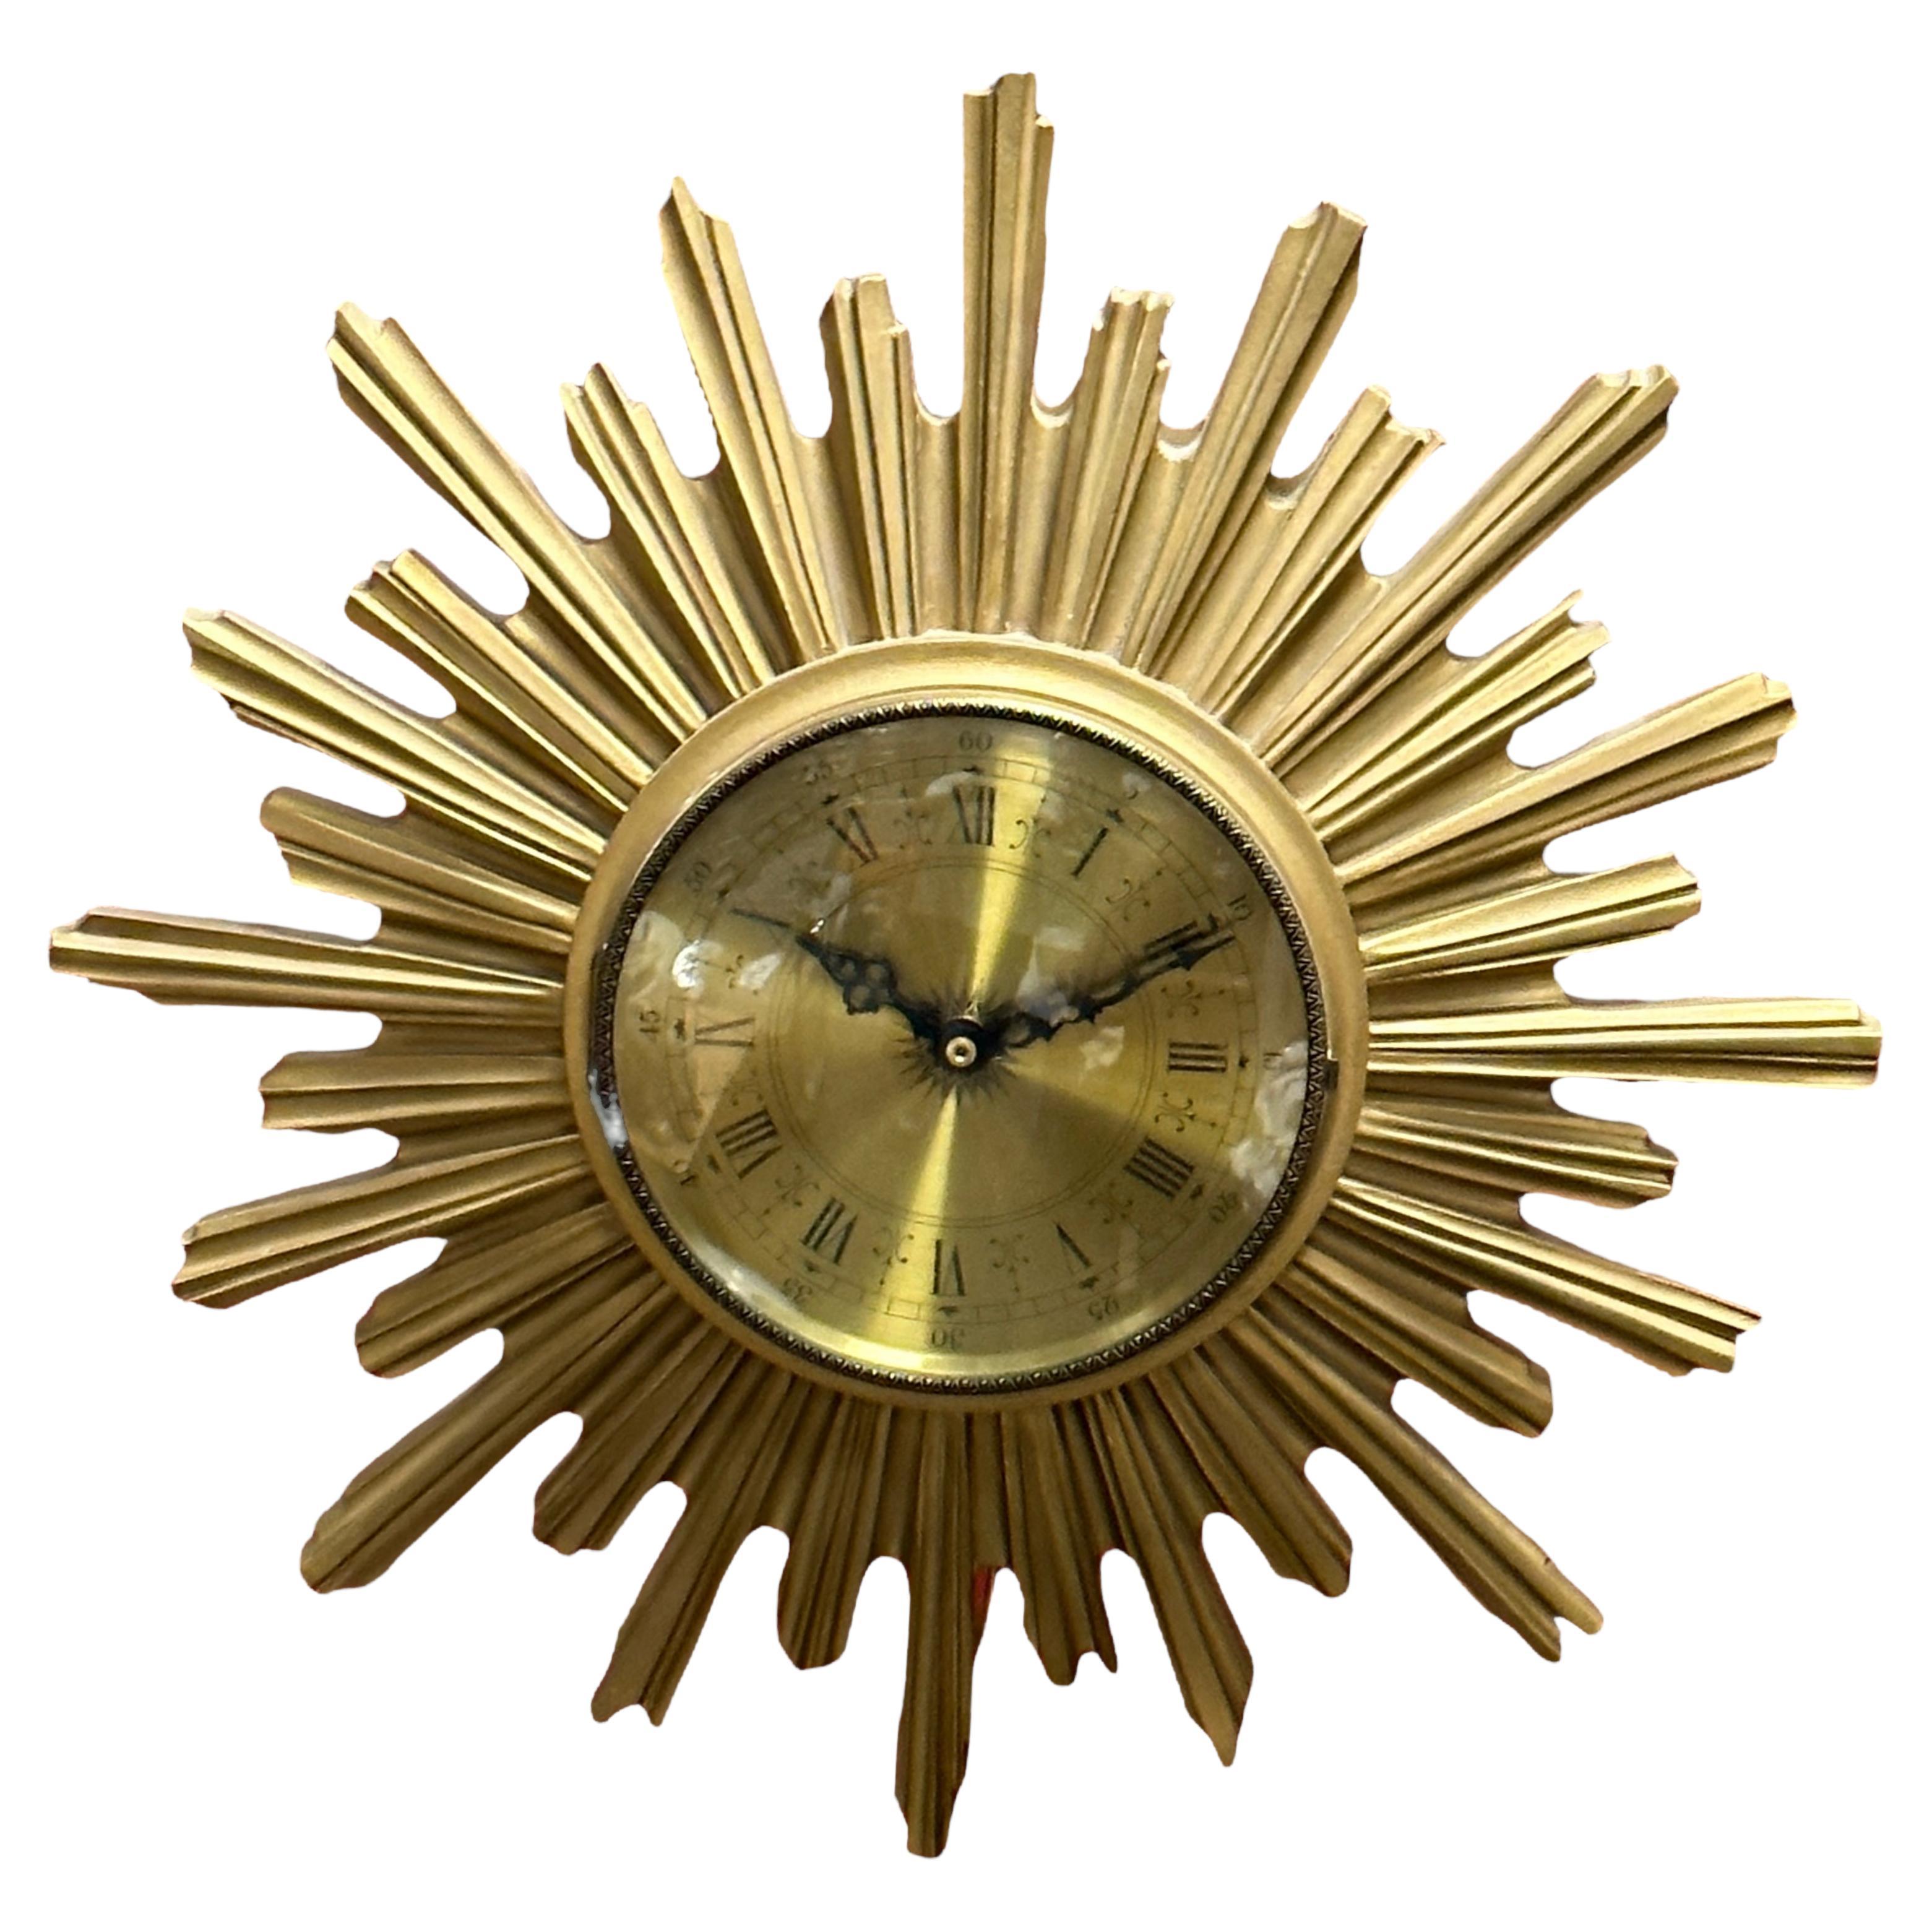 What is a sunburst clock?